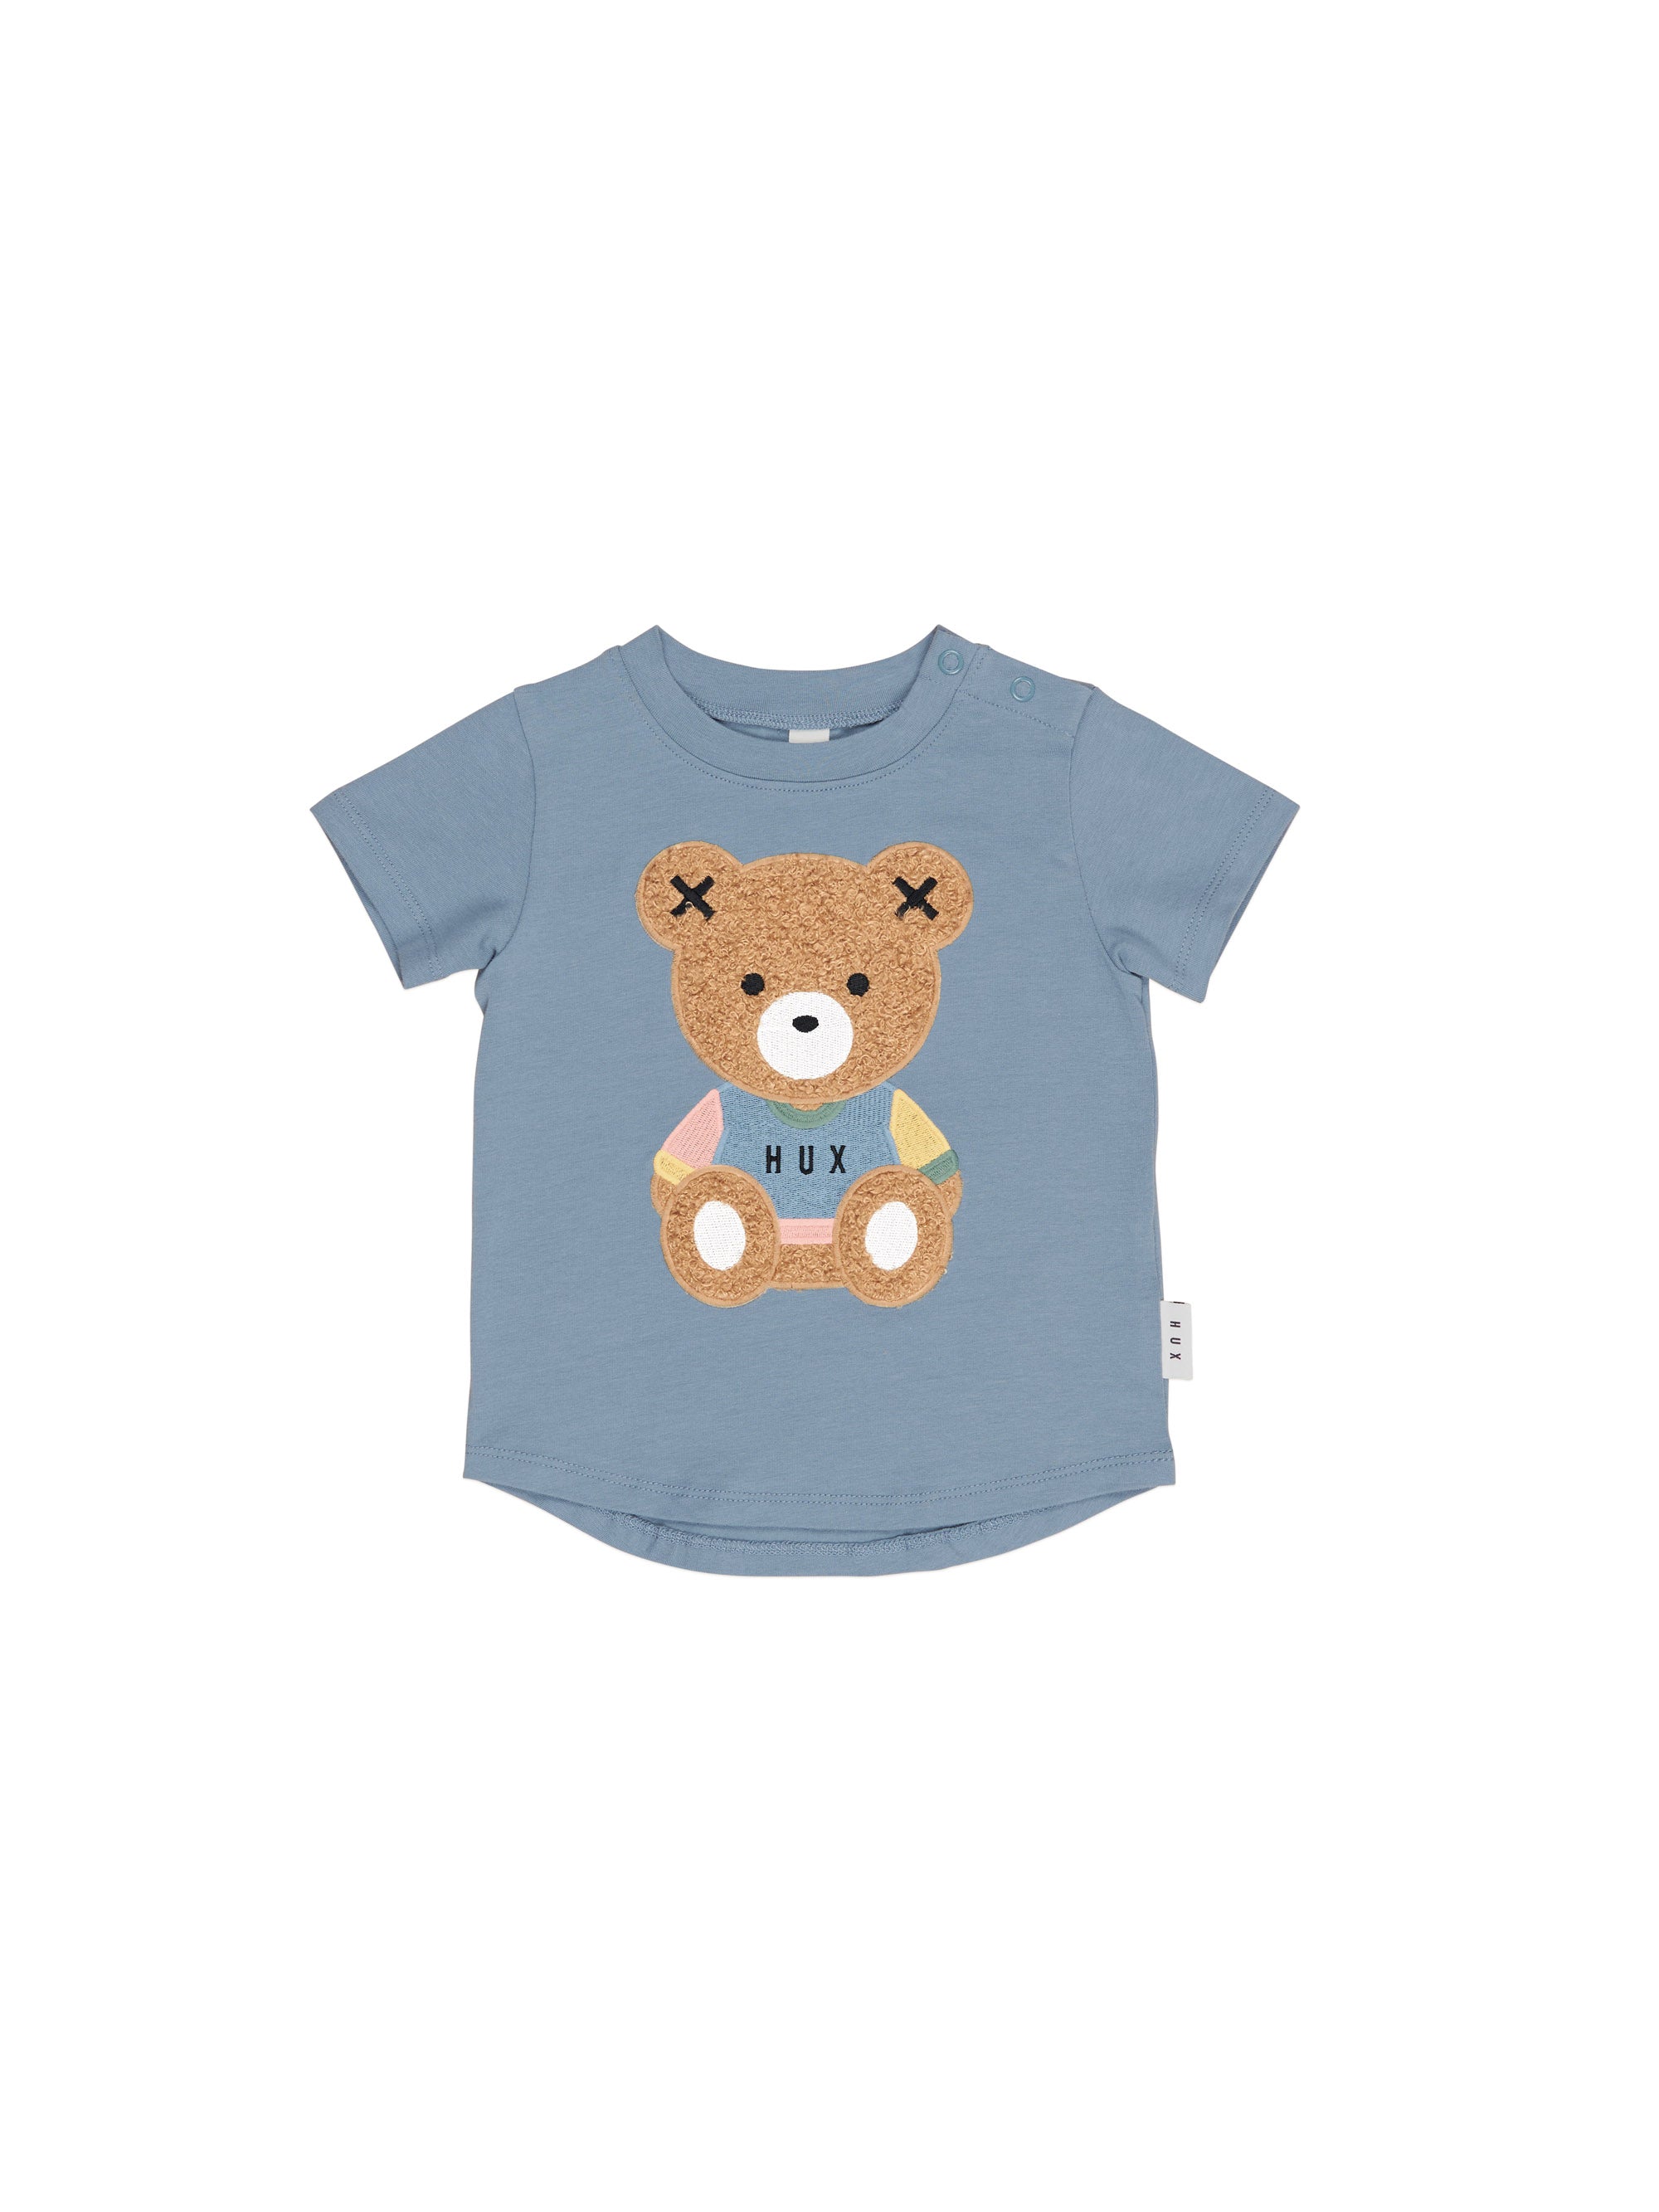 Blue Teddy Hux T-Shirt